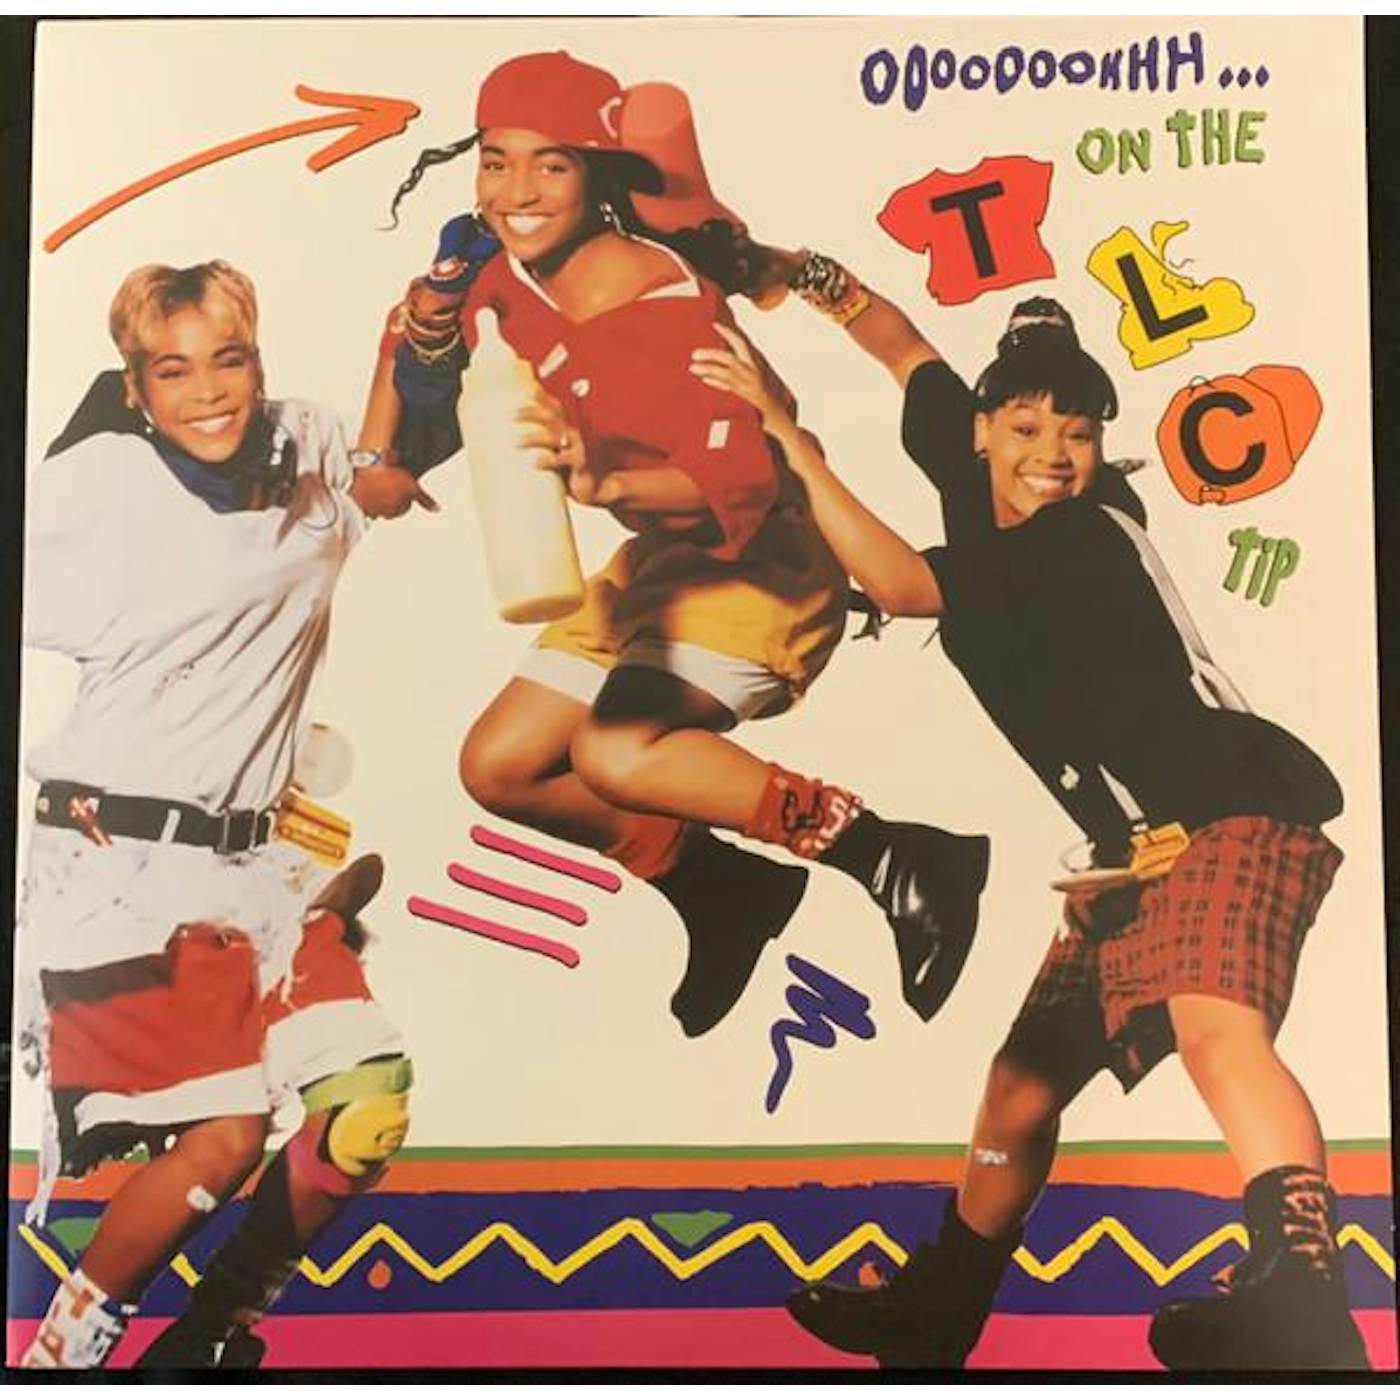 OOOOOOOHHH...ON THE TLC TIP (150G/DL CARD) Vinyl Record